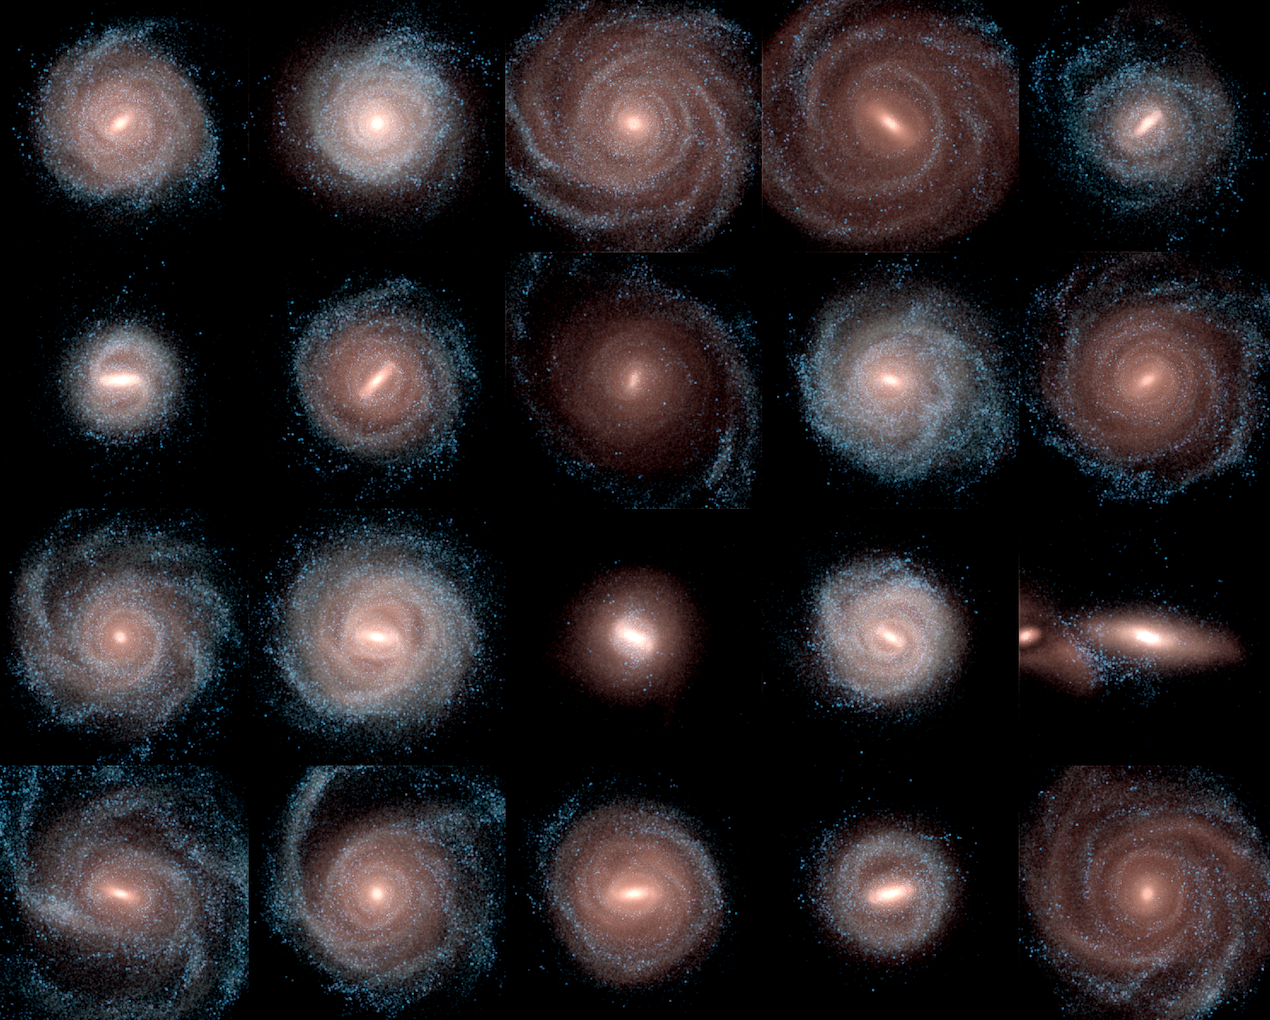 A sample of Auriga galaxies